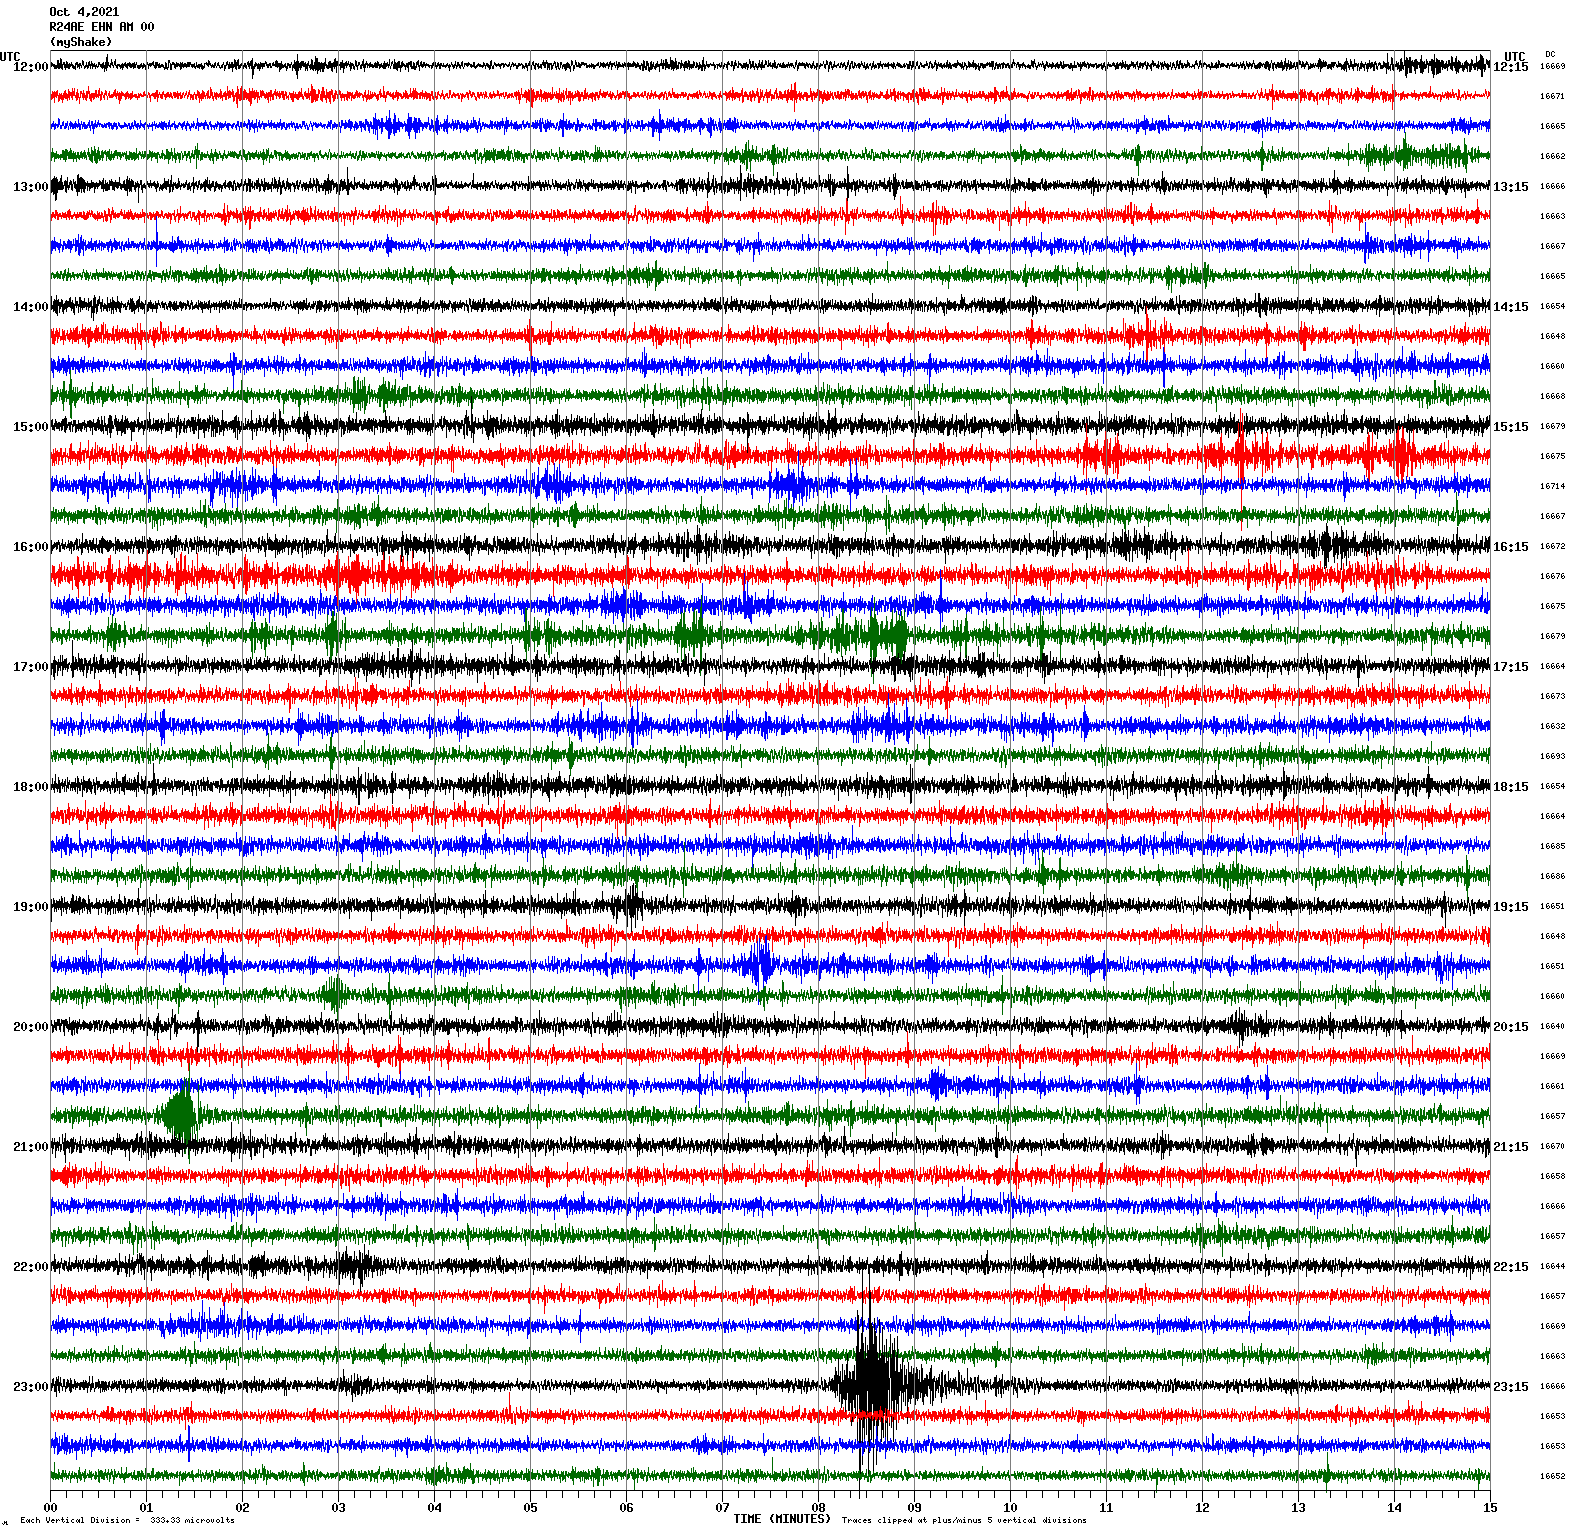 /seismic-data/R24AE/R24AE_EHN_AM_00.2021100412.gif